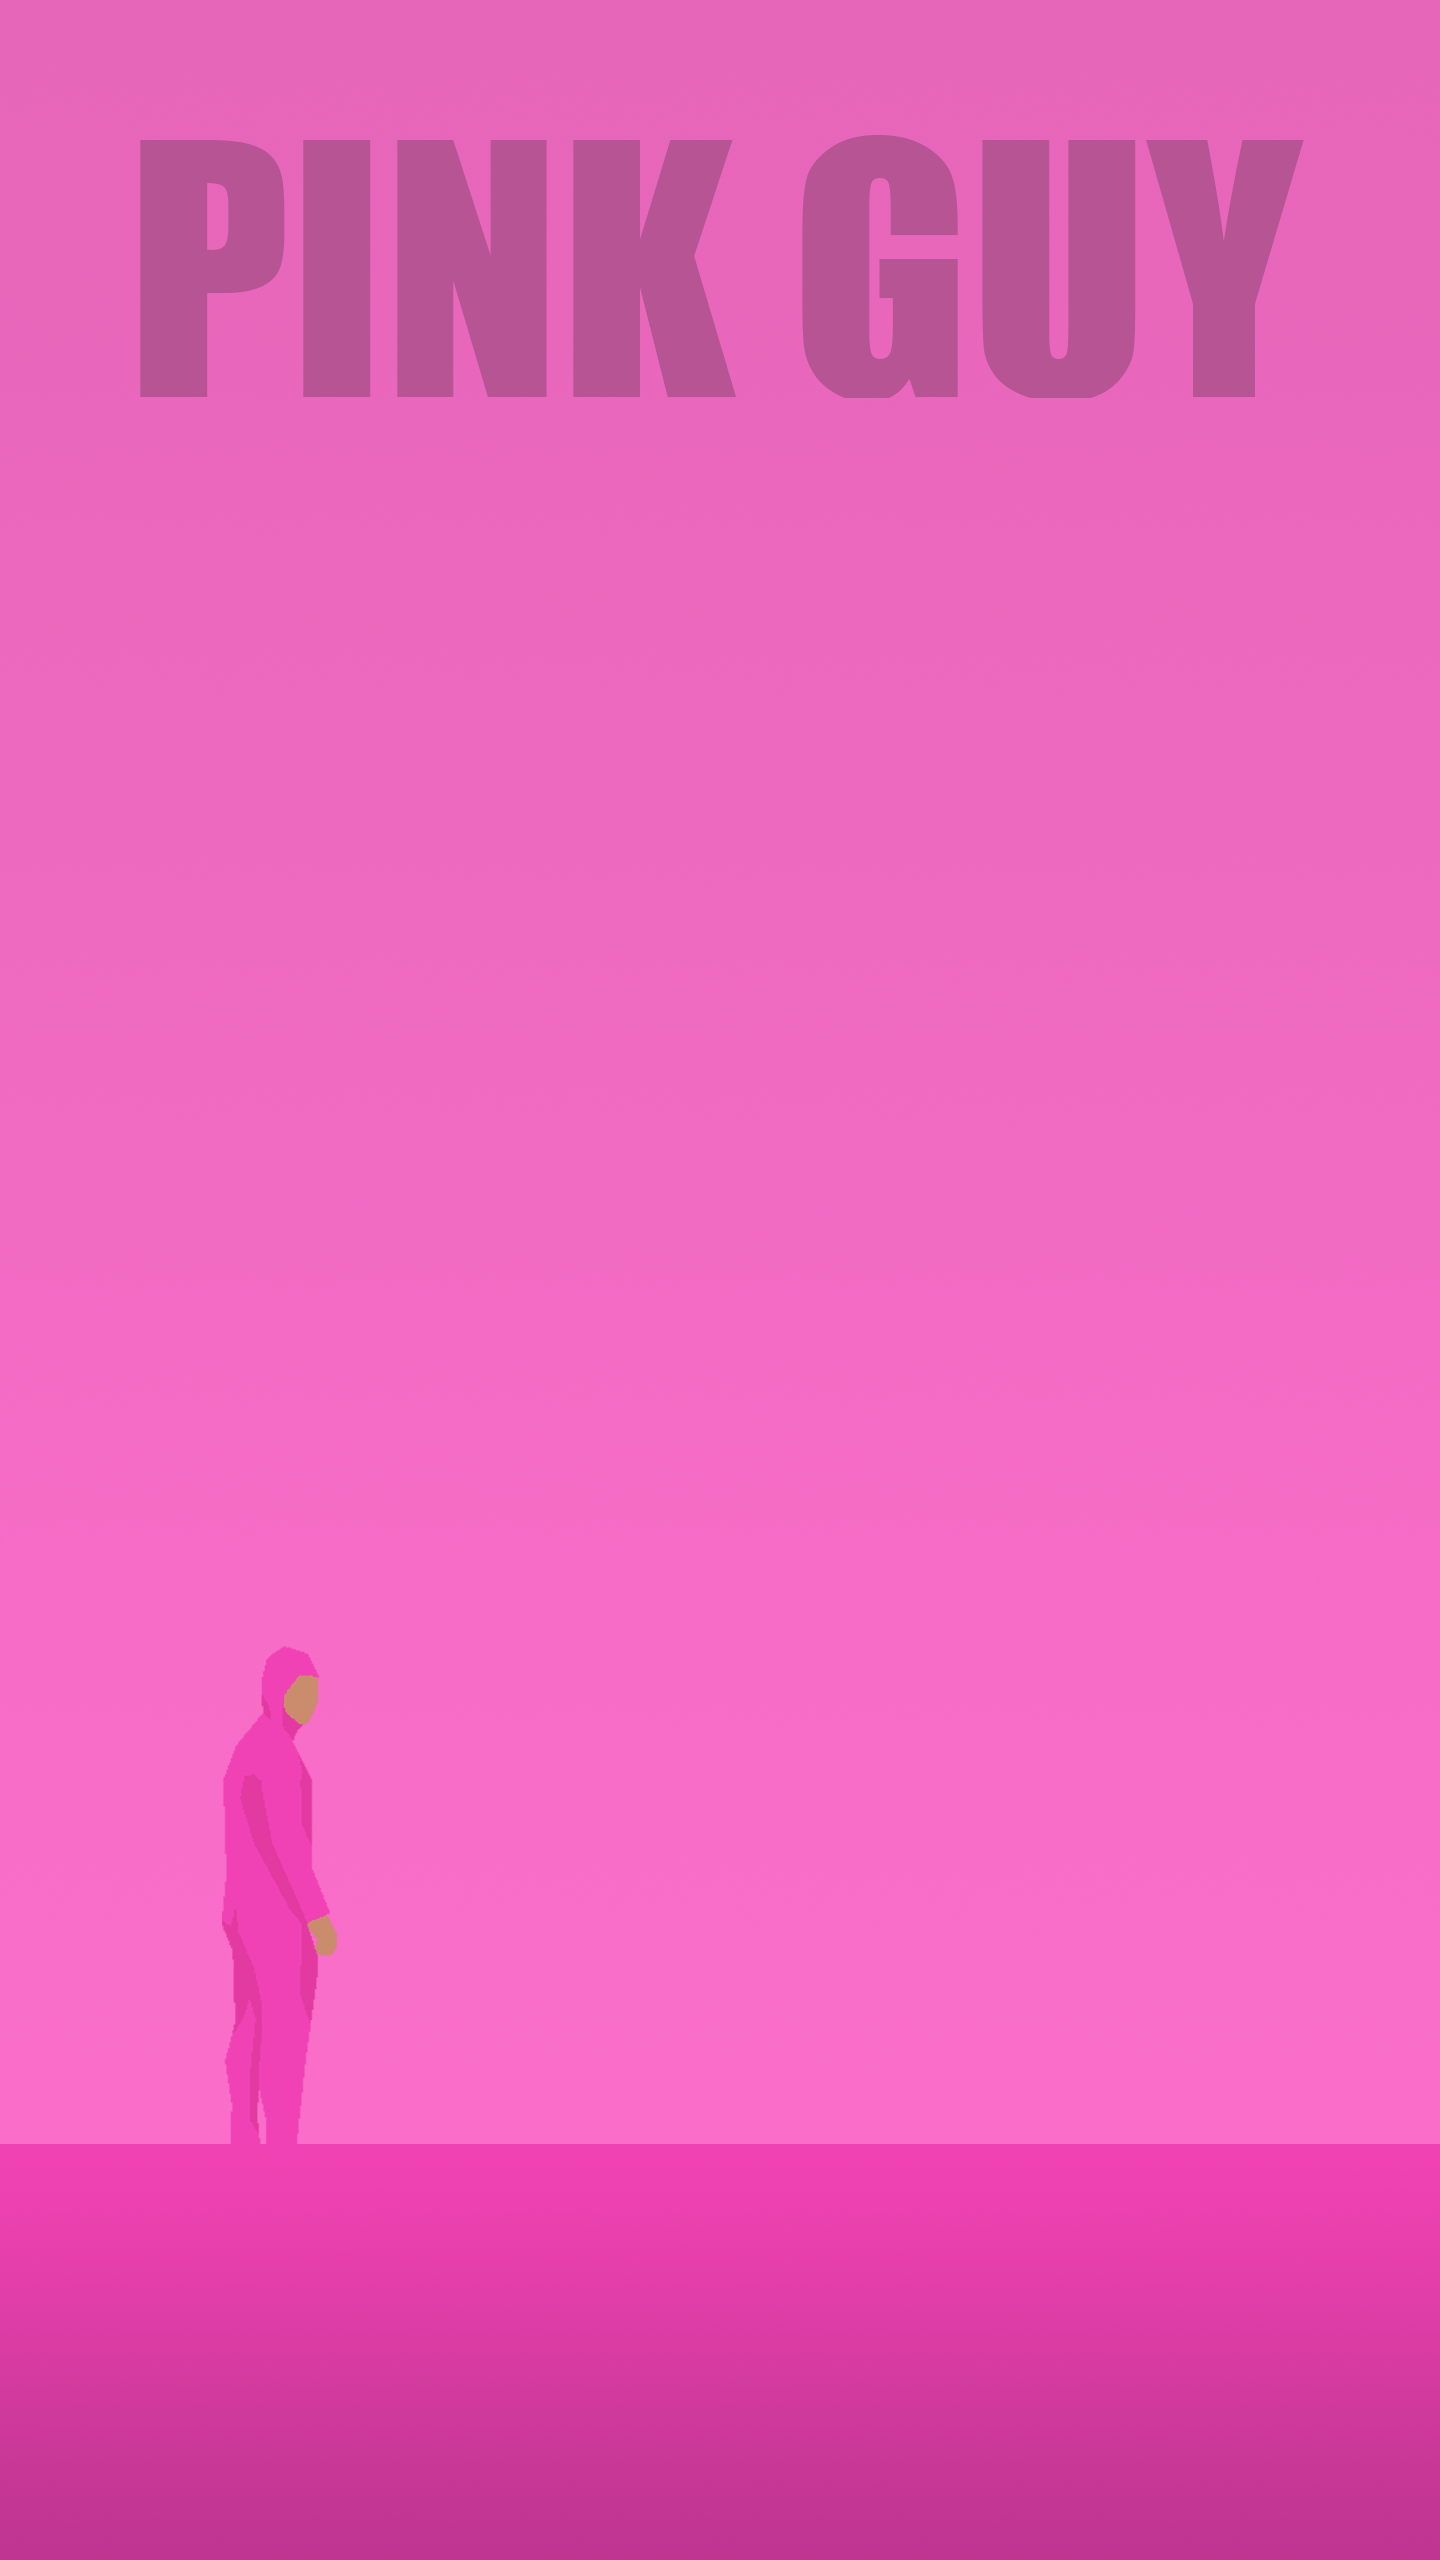 Joji Pink Guy Wallpaper APK for Android Download